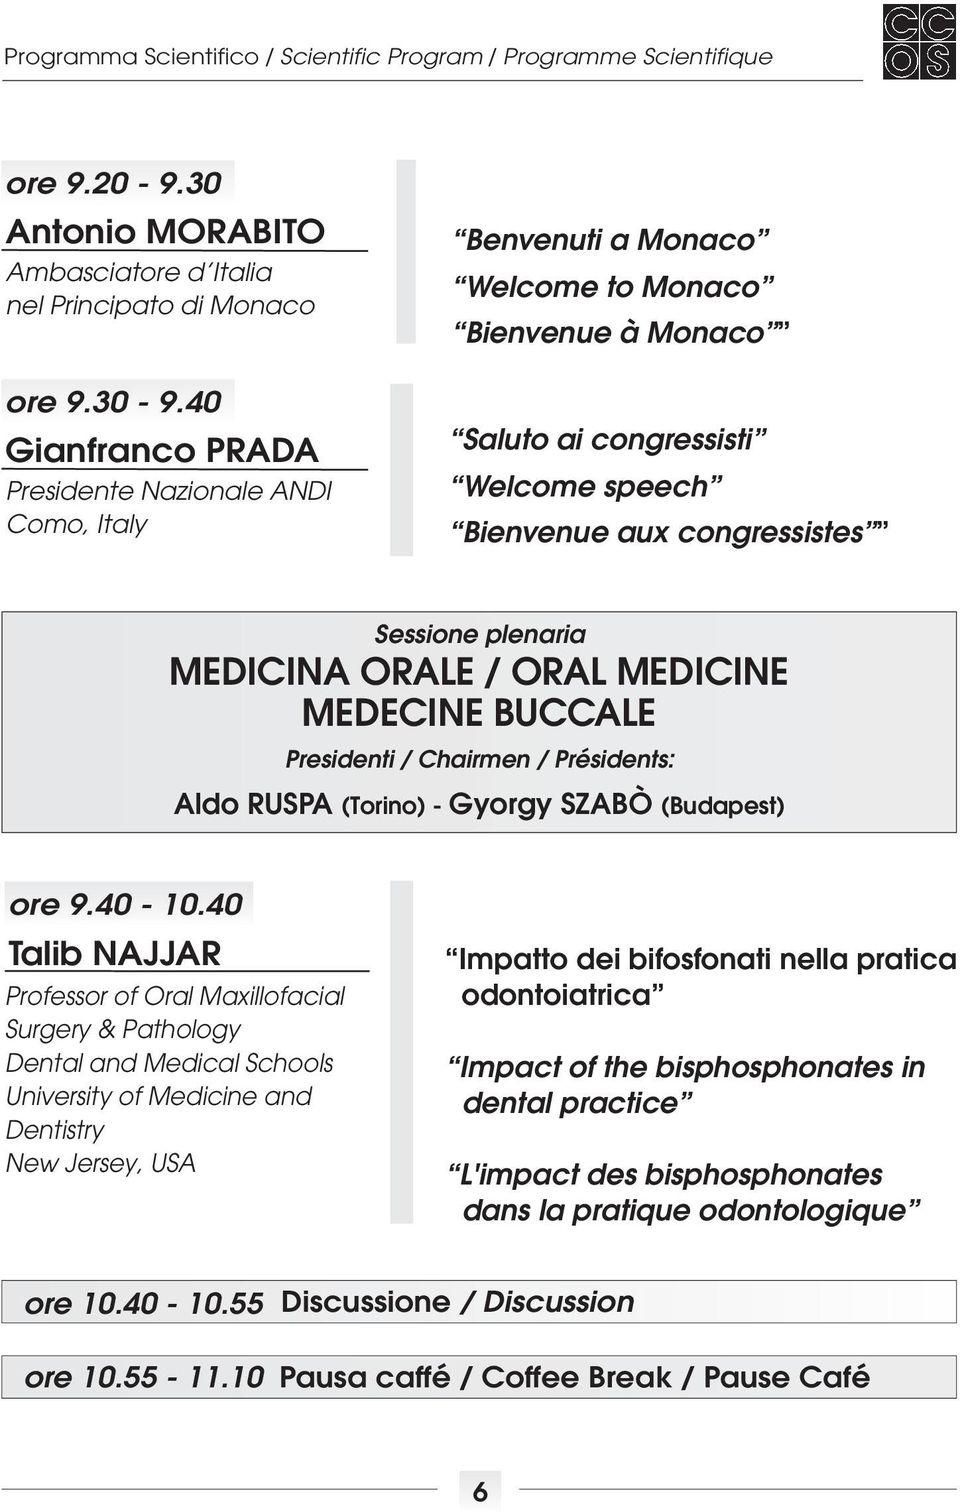 MEDICINA ORALE / ORAL MEDICINE MEDECINE BUCCALE Presidenti / Chairmen / Présidents: Aldo RUSPA (Torino) - Gyorgy SZABÒ (Budapest) ore 9.40-10.